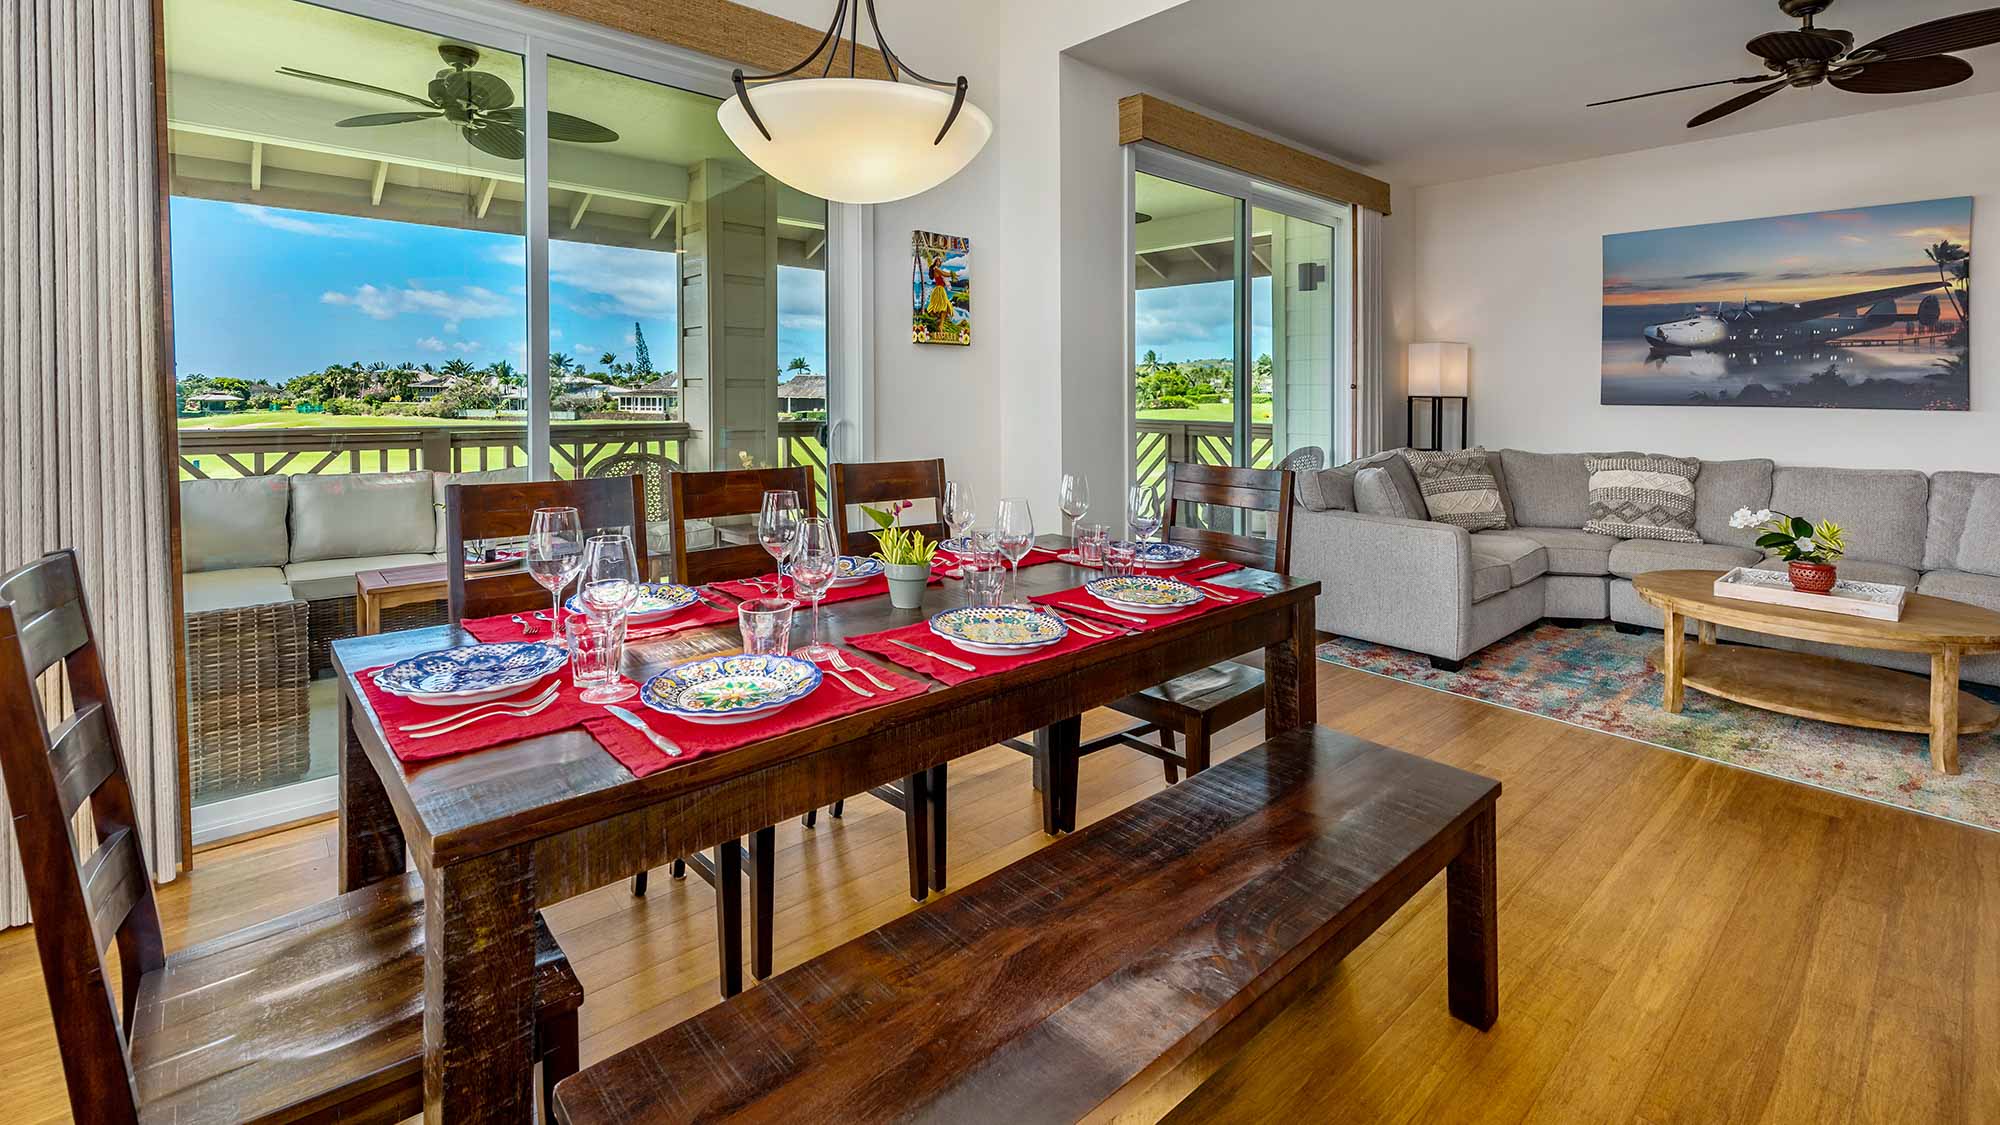 Pili Mai Resort at Poipu #06E - Dining Room & Living Room - Parrish Kauai